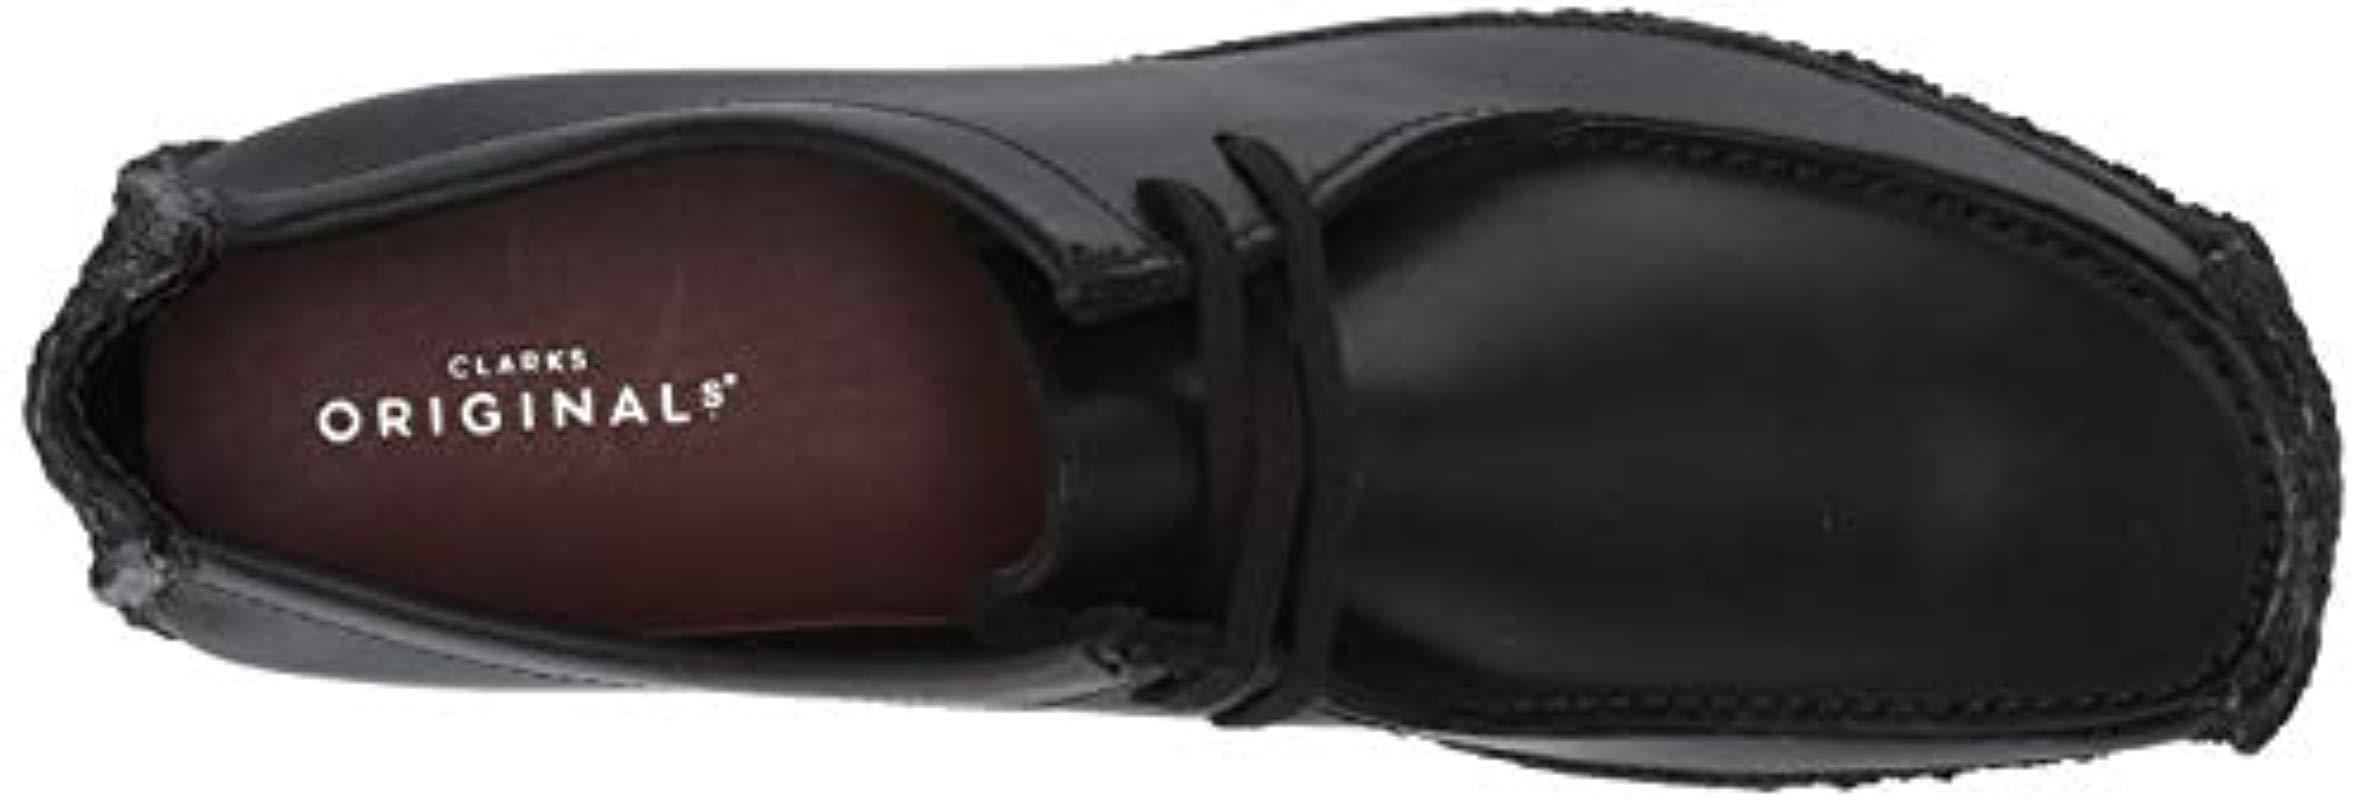 Clarks Leather Natalie Moccasin in Black Leather (Black) for Men | Lyst